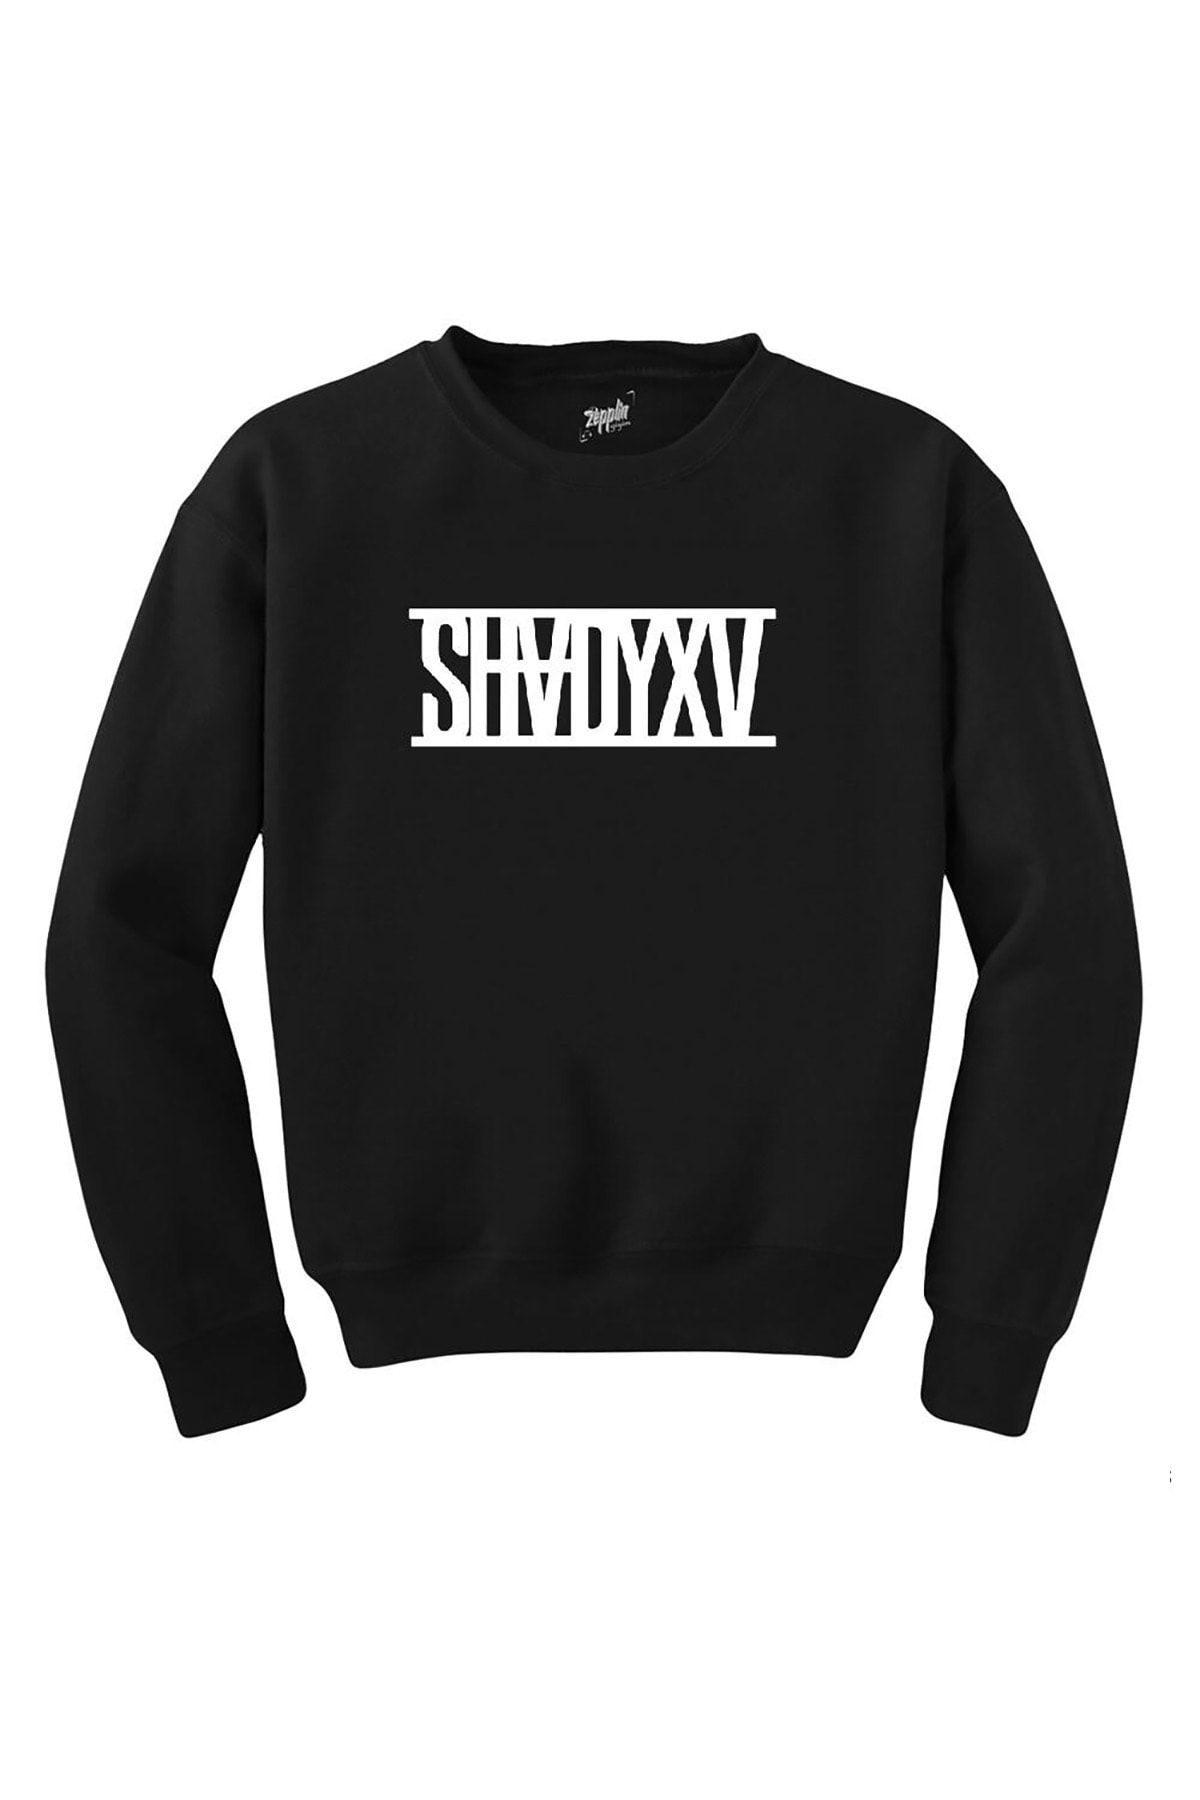 Z zepplin Eminem Shady Xv Classic Siyah Sweatshirt